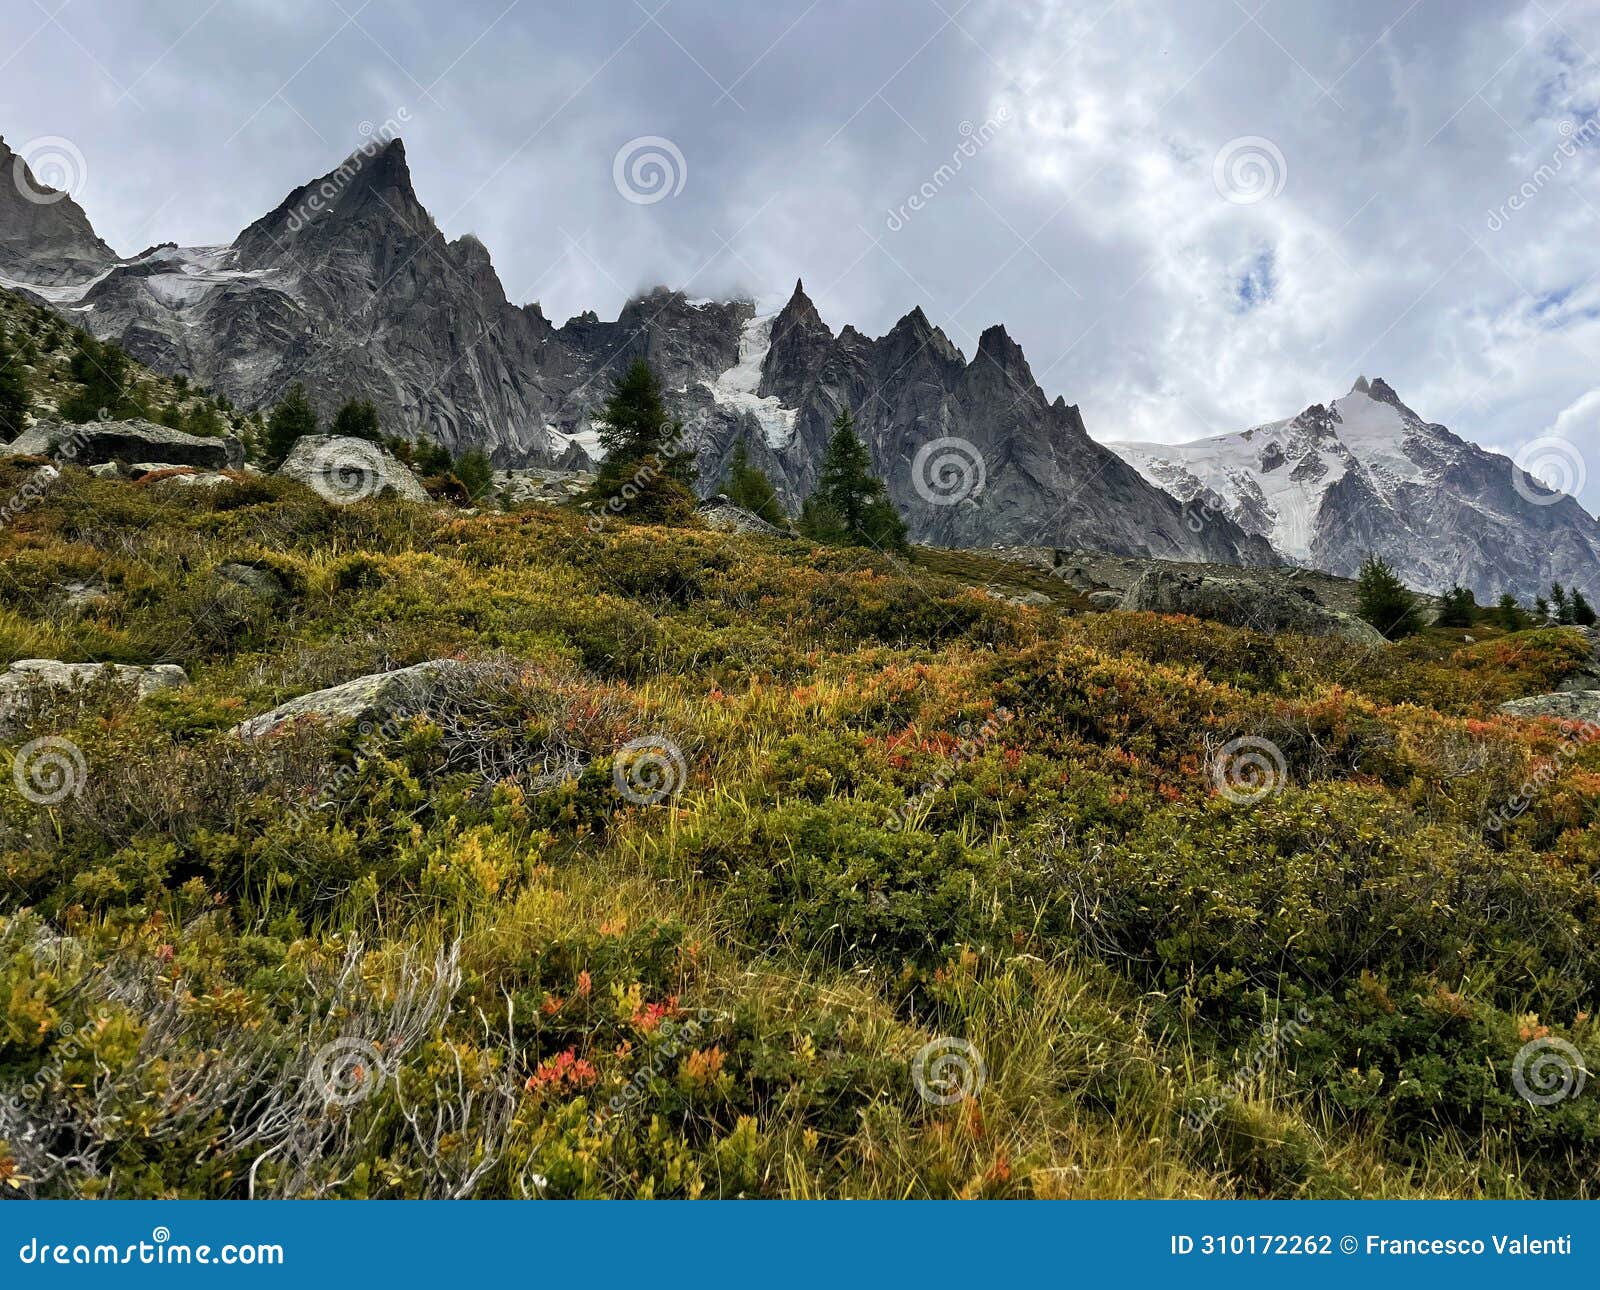 panoramic peaks: grand balcon mountain trail path, chamonix, france